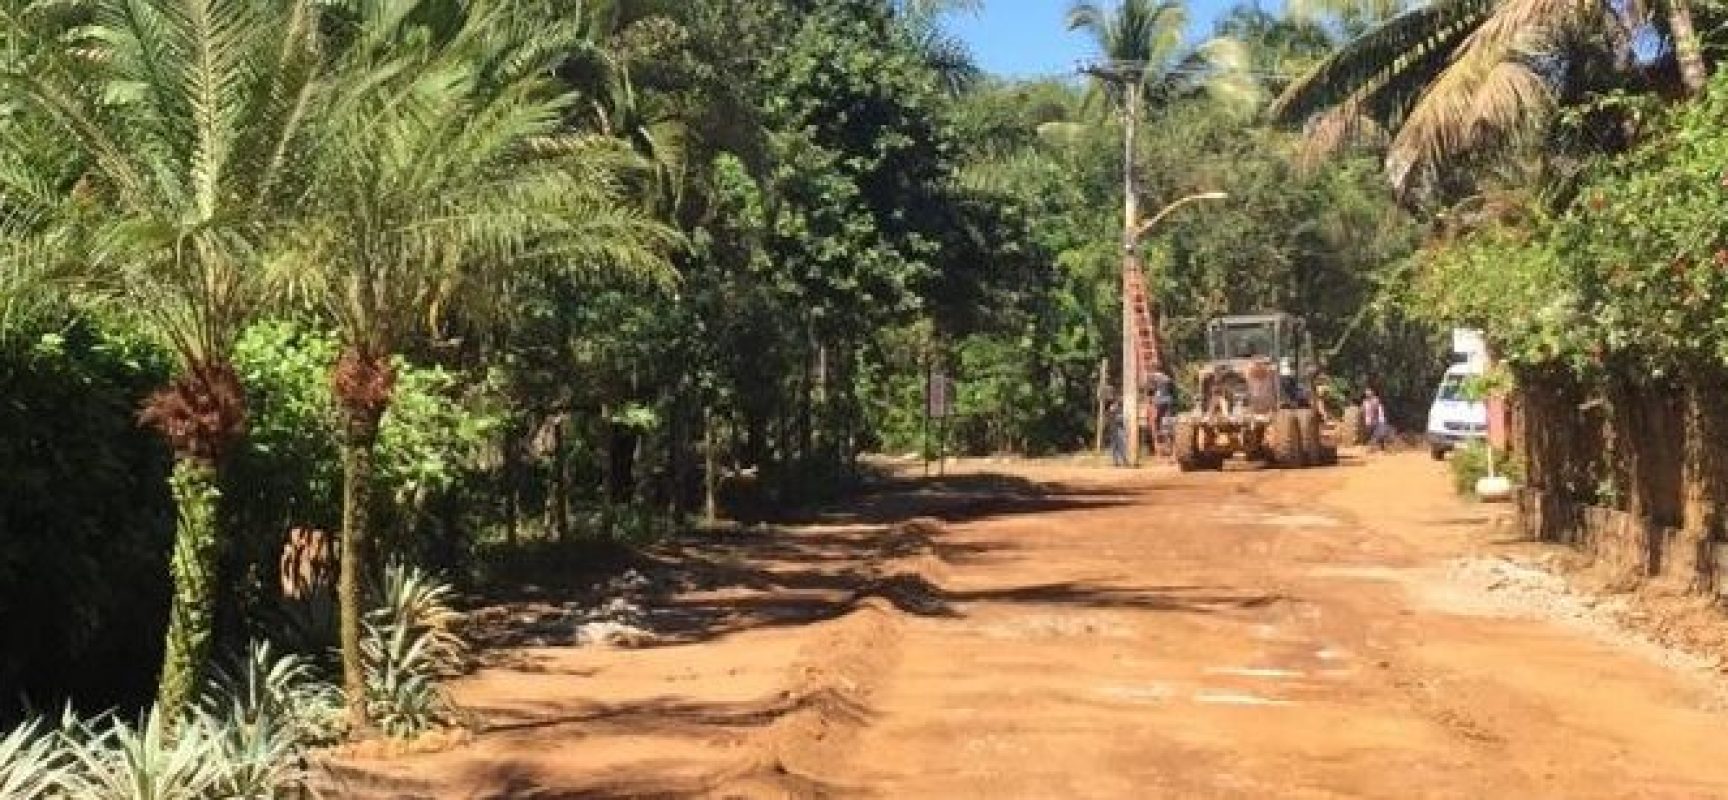 SERVIÇOS: Prefeitura de Itacaré realiza obras  de patrolamento da Praia da Concha